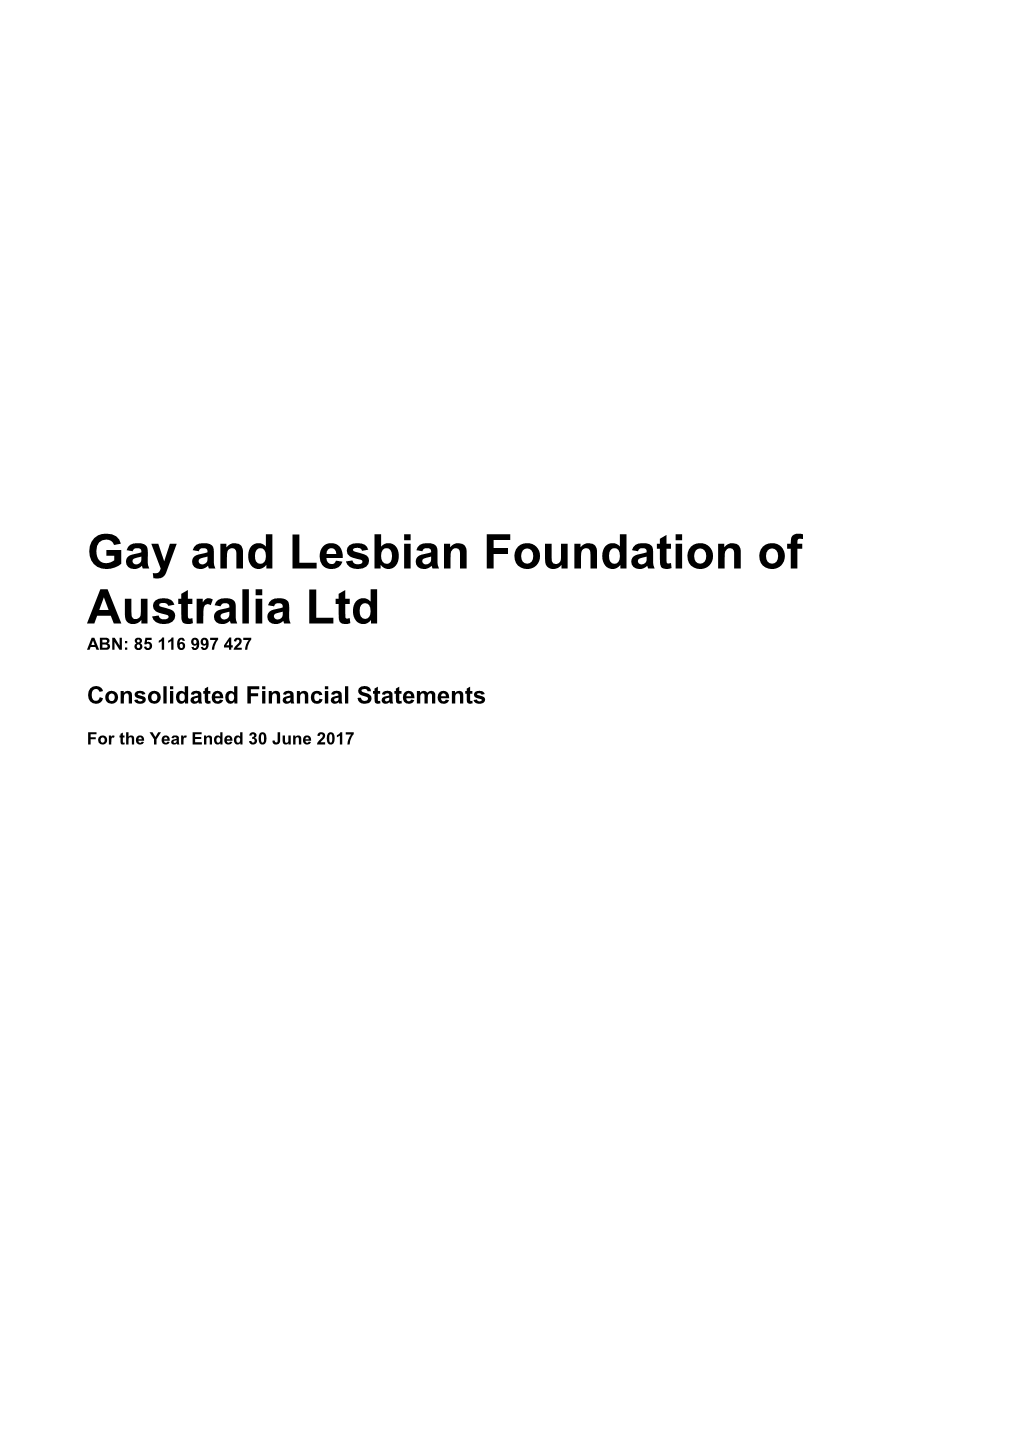 Gay and Lesbian Foundation of Australia Ltd ABN: 85 116 997 427